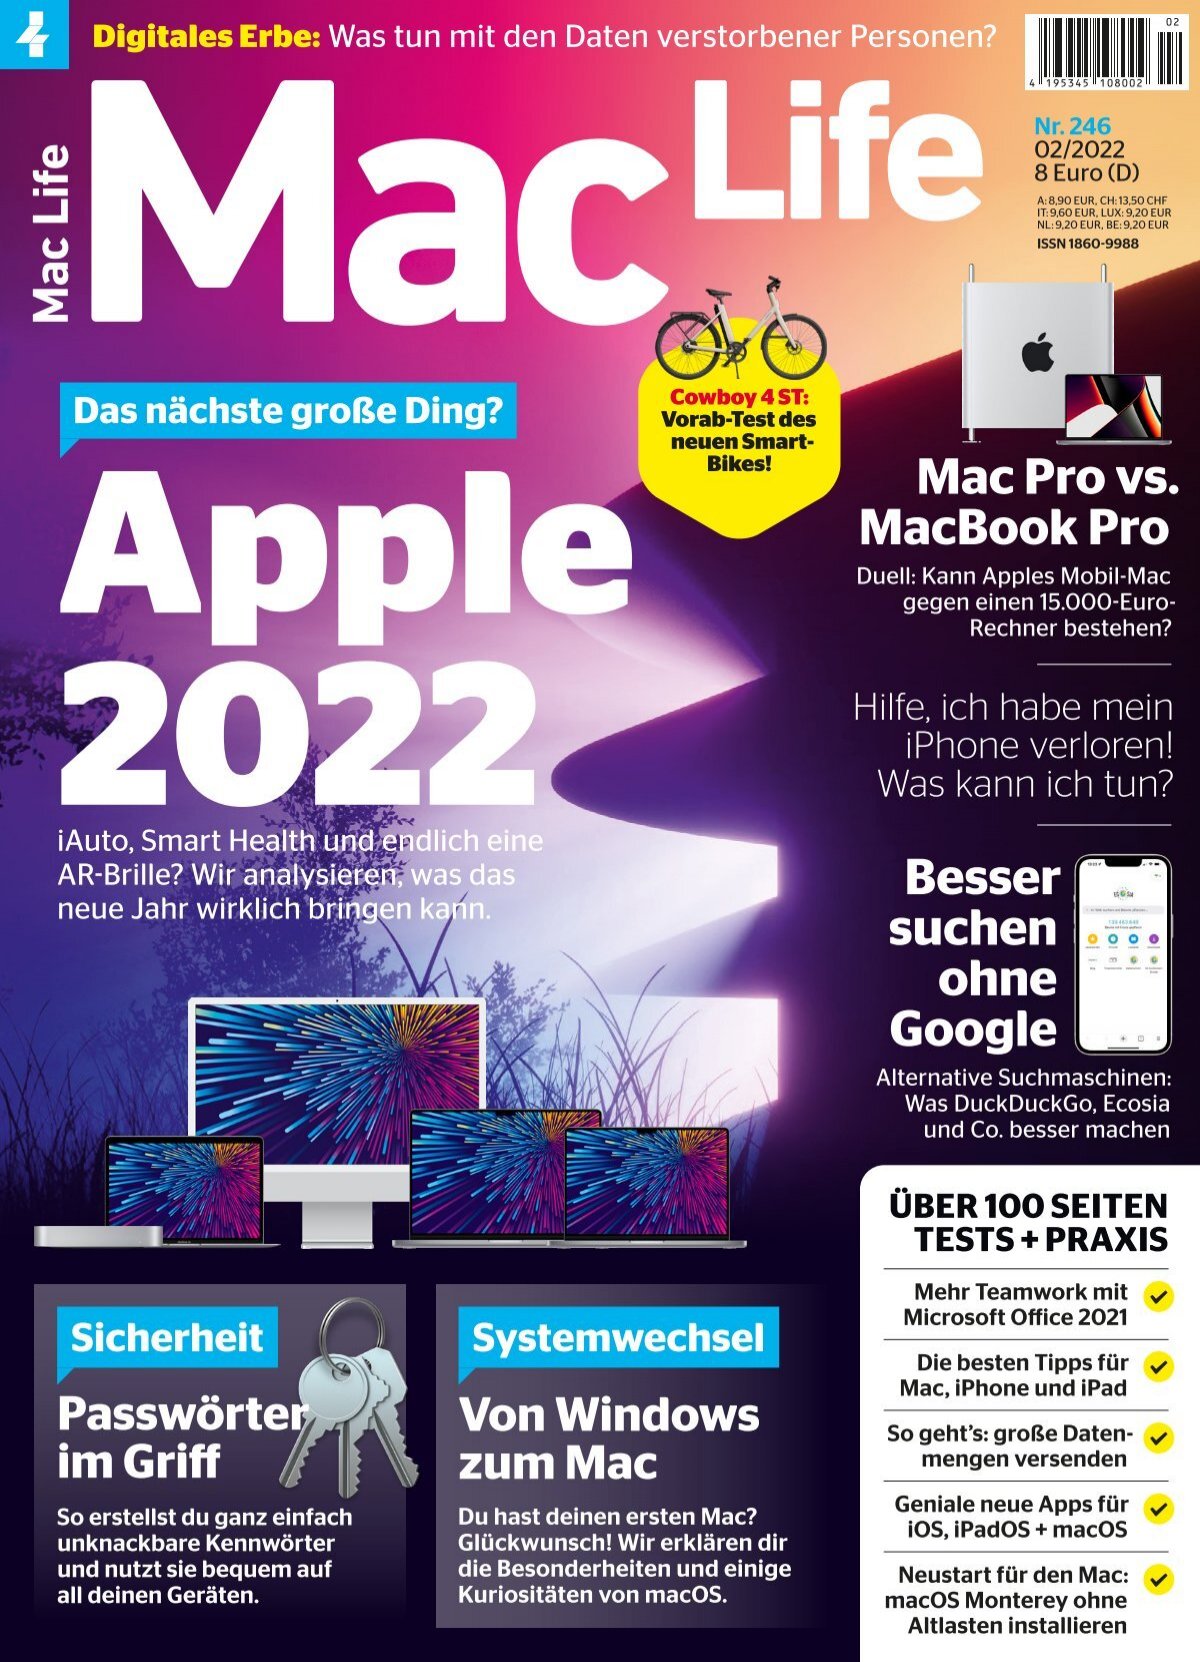 Mac Life 02/2022